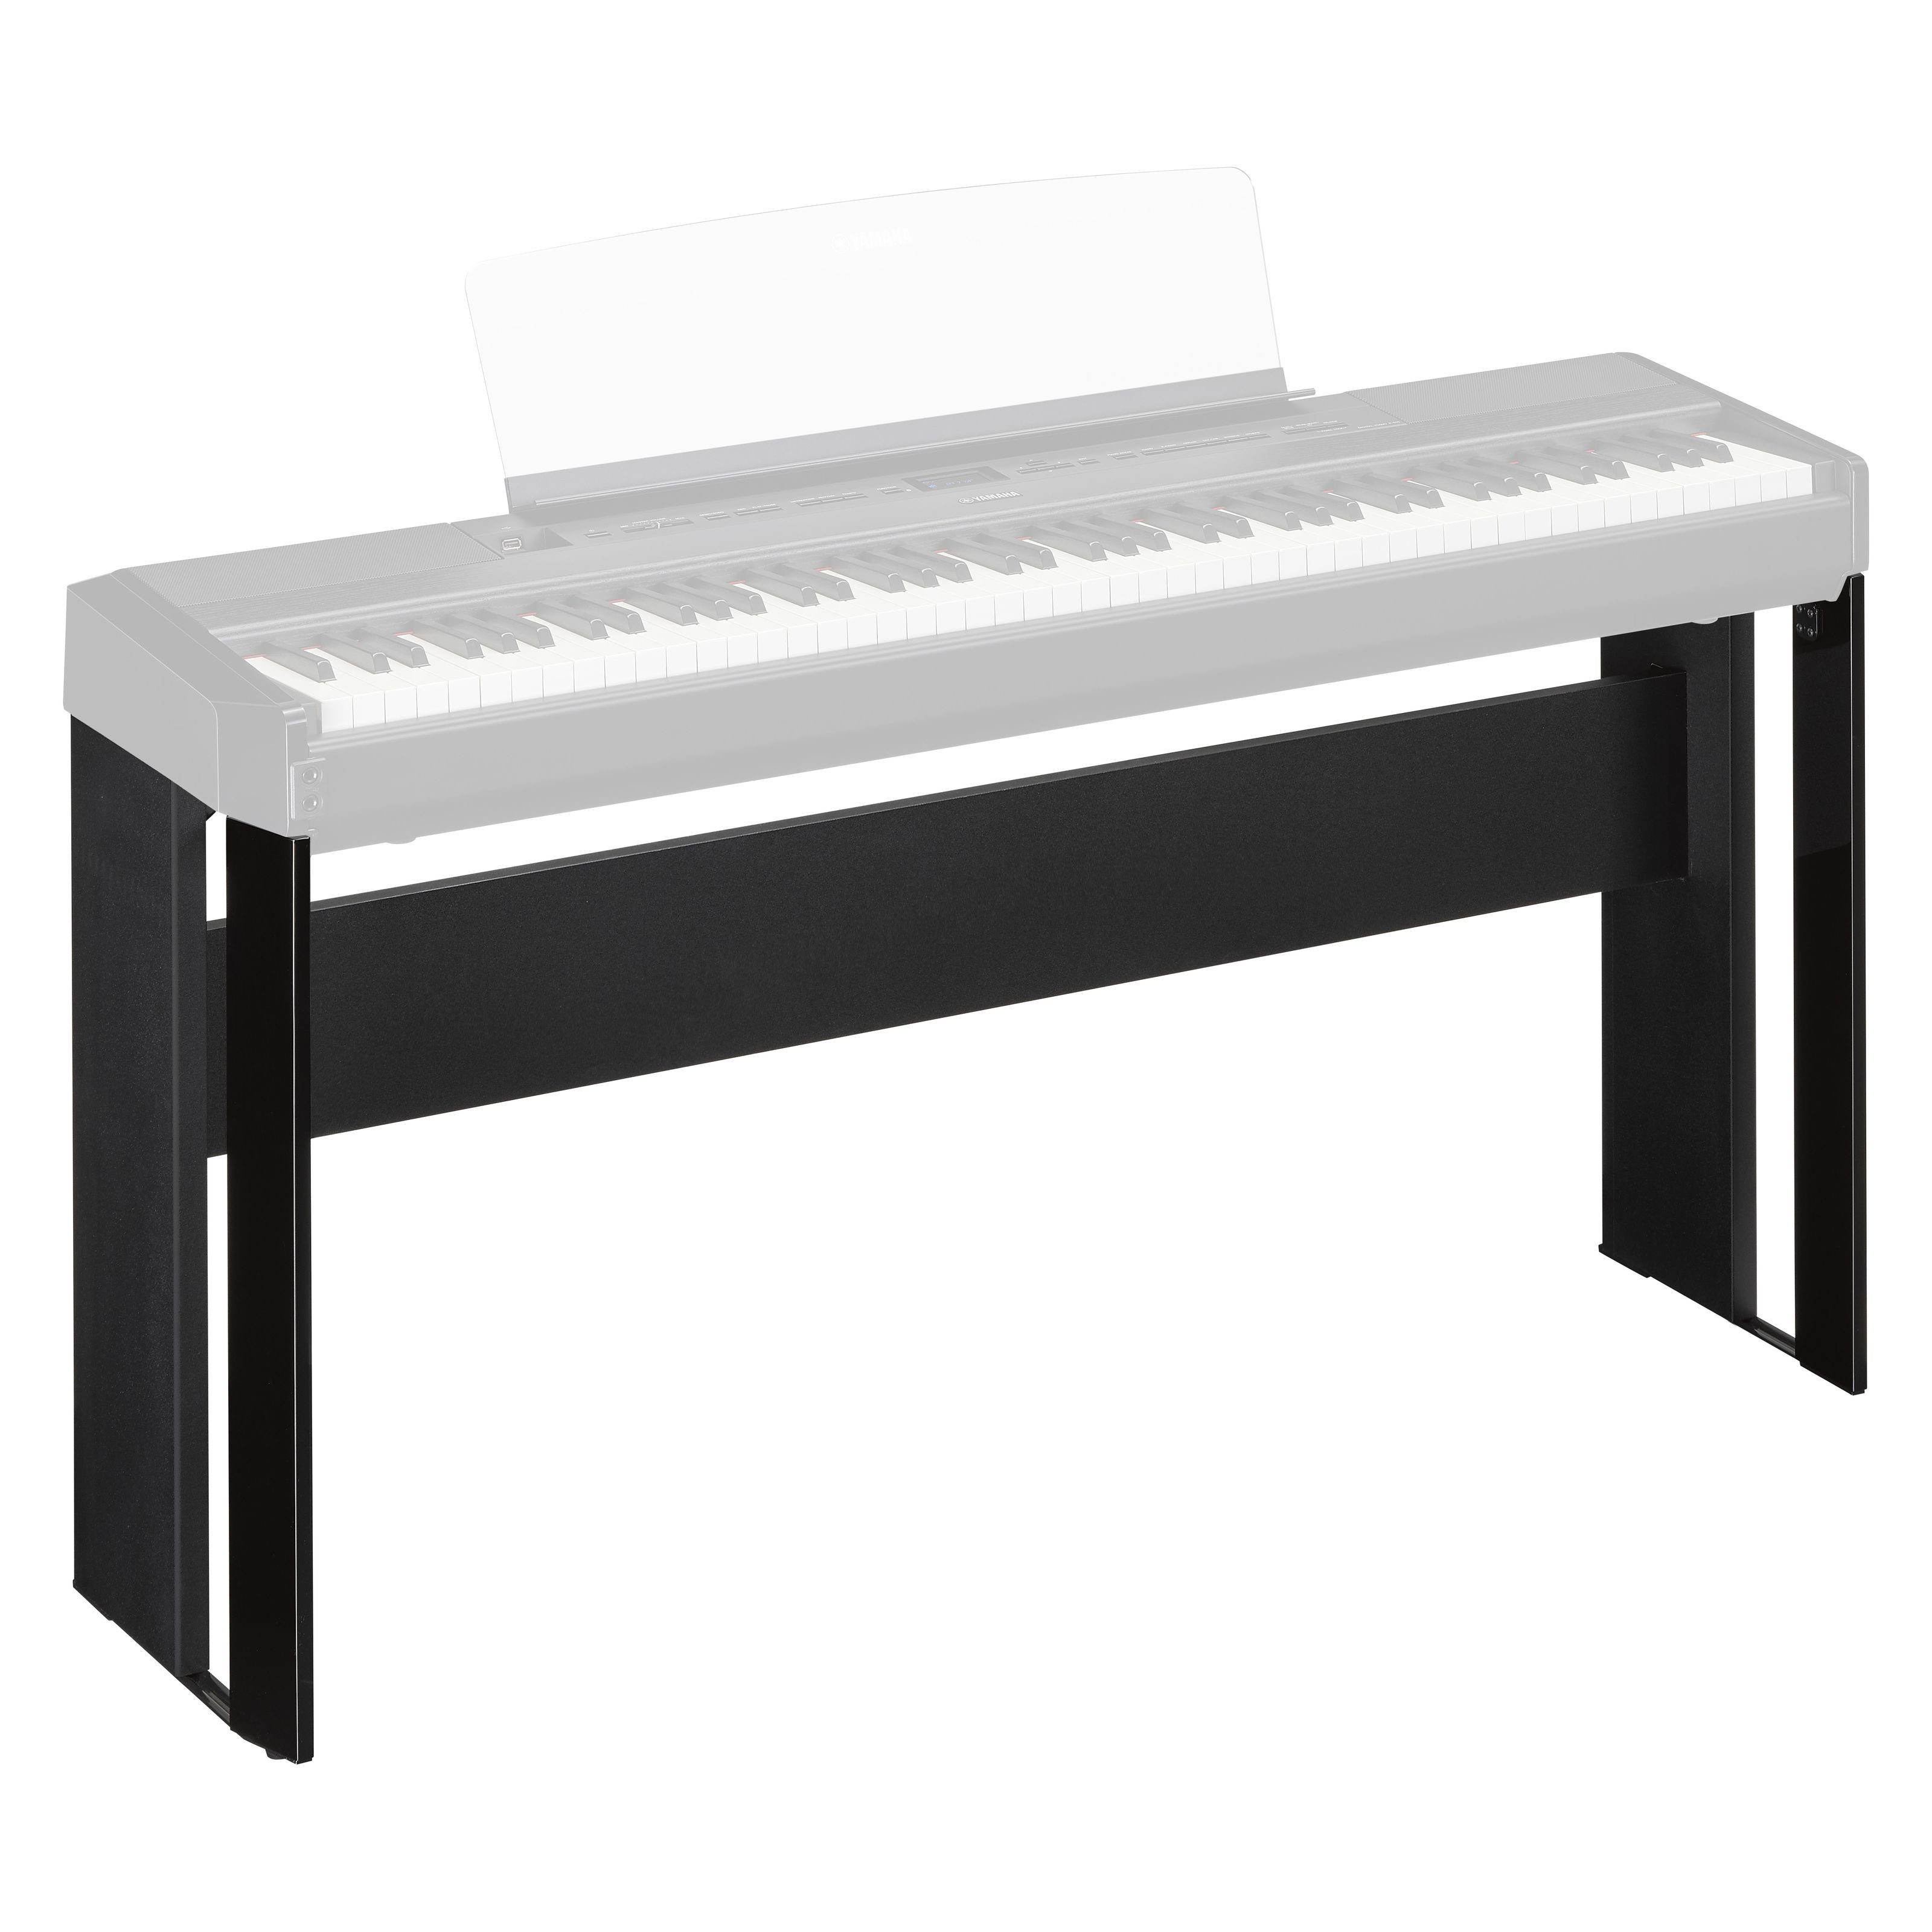 Yamaha Pianoständer, (L-515 B, Stative für Tasteninstrumente, Piano-Stative), L-515 B - Keyboardständer